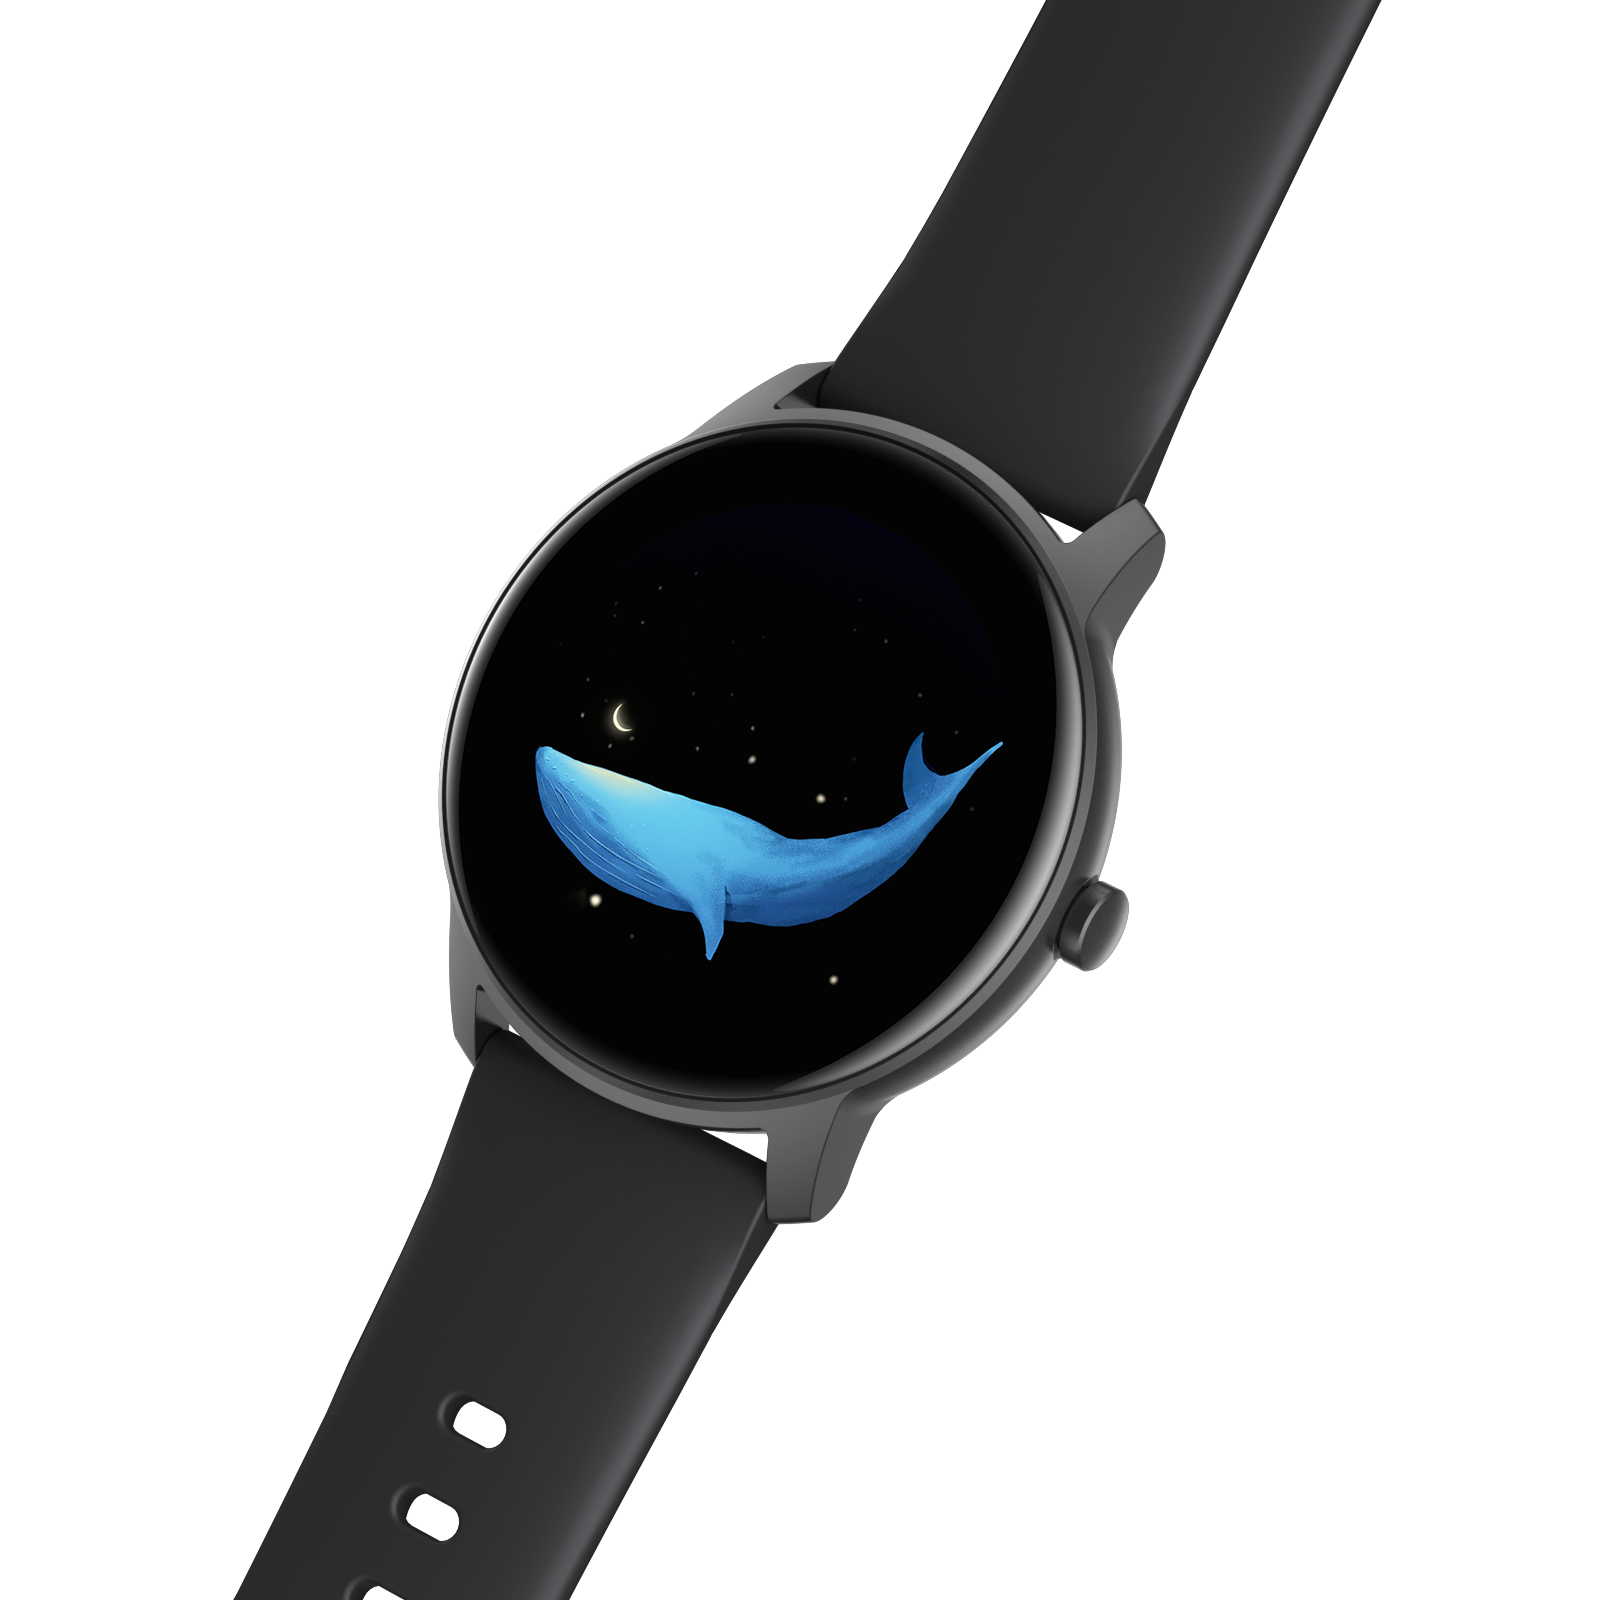 Wiwu Smart watch black display on 